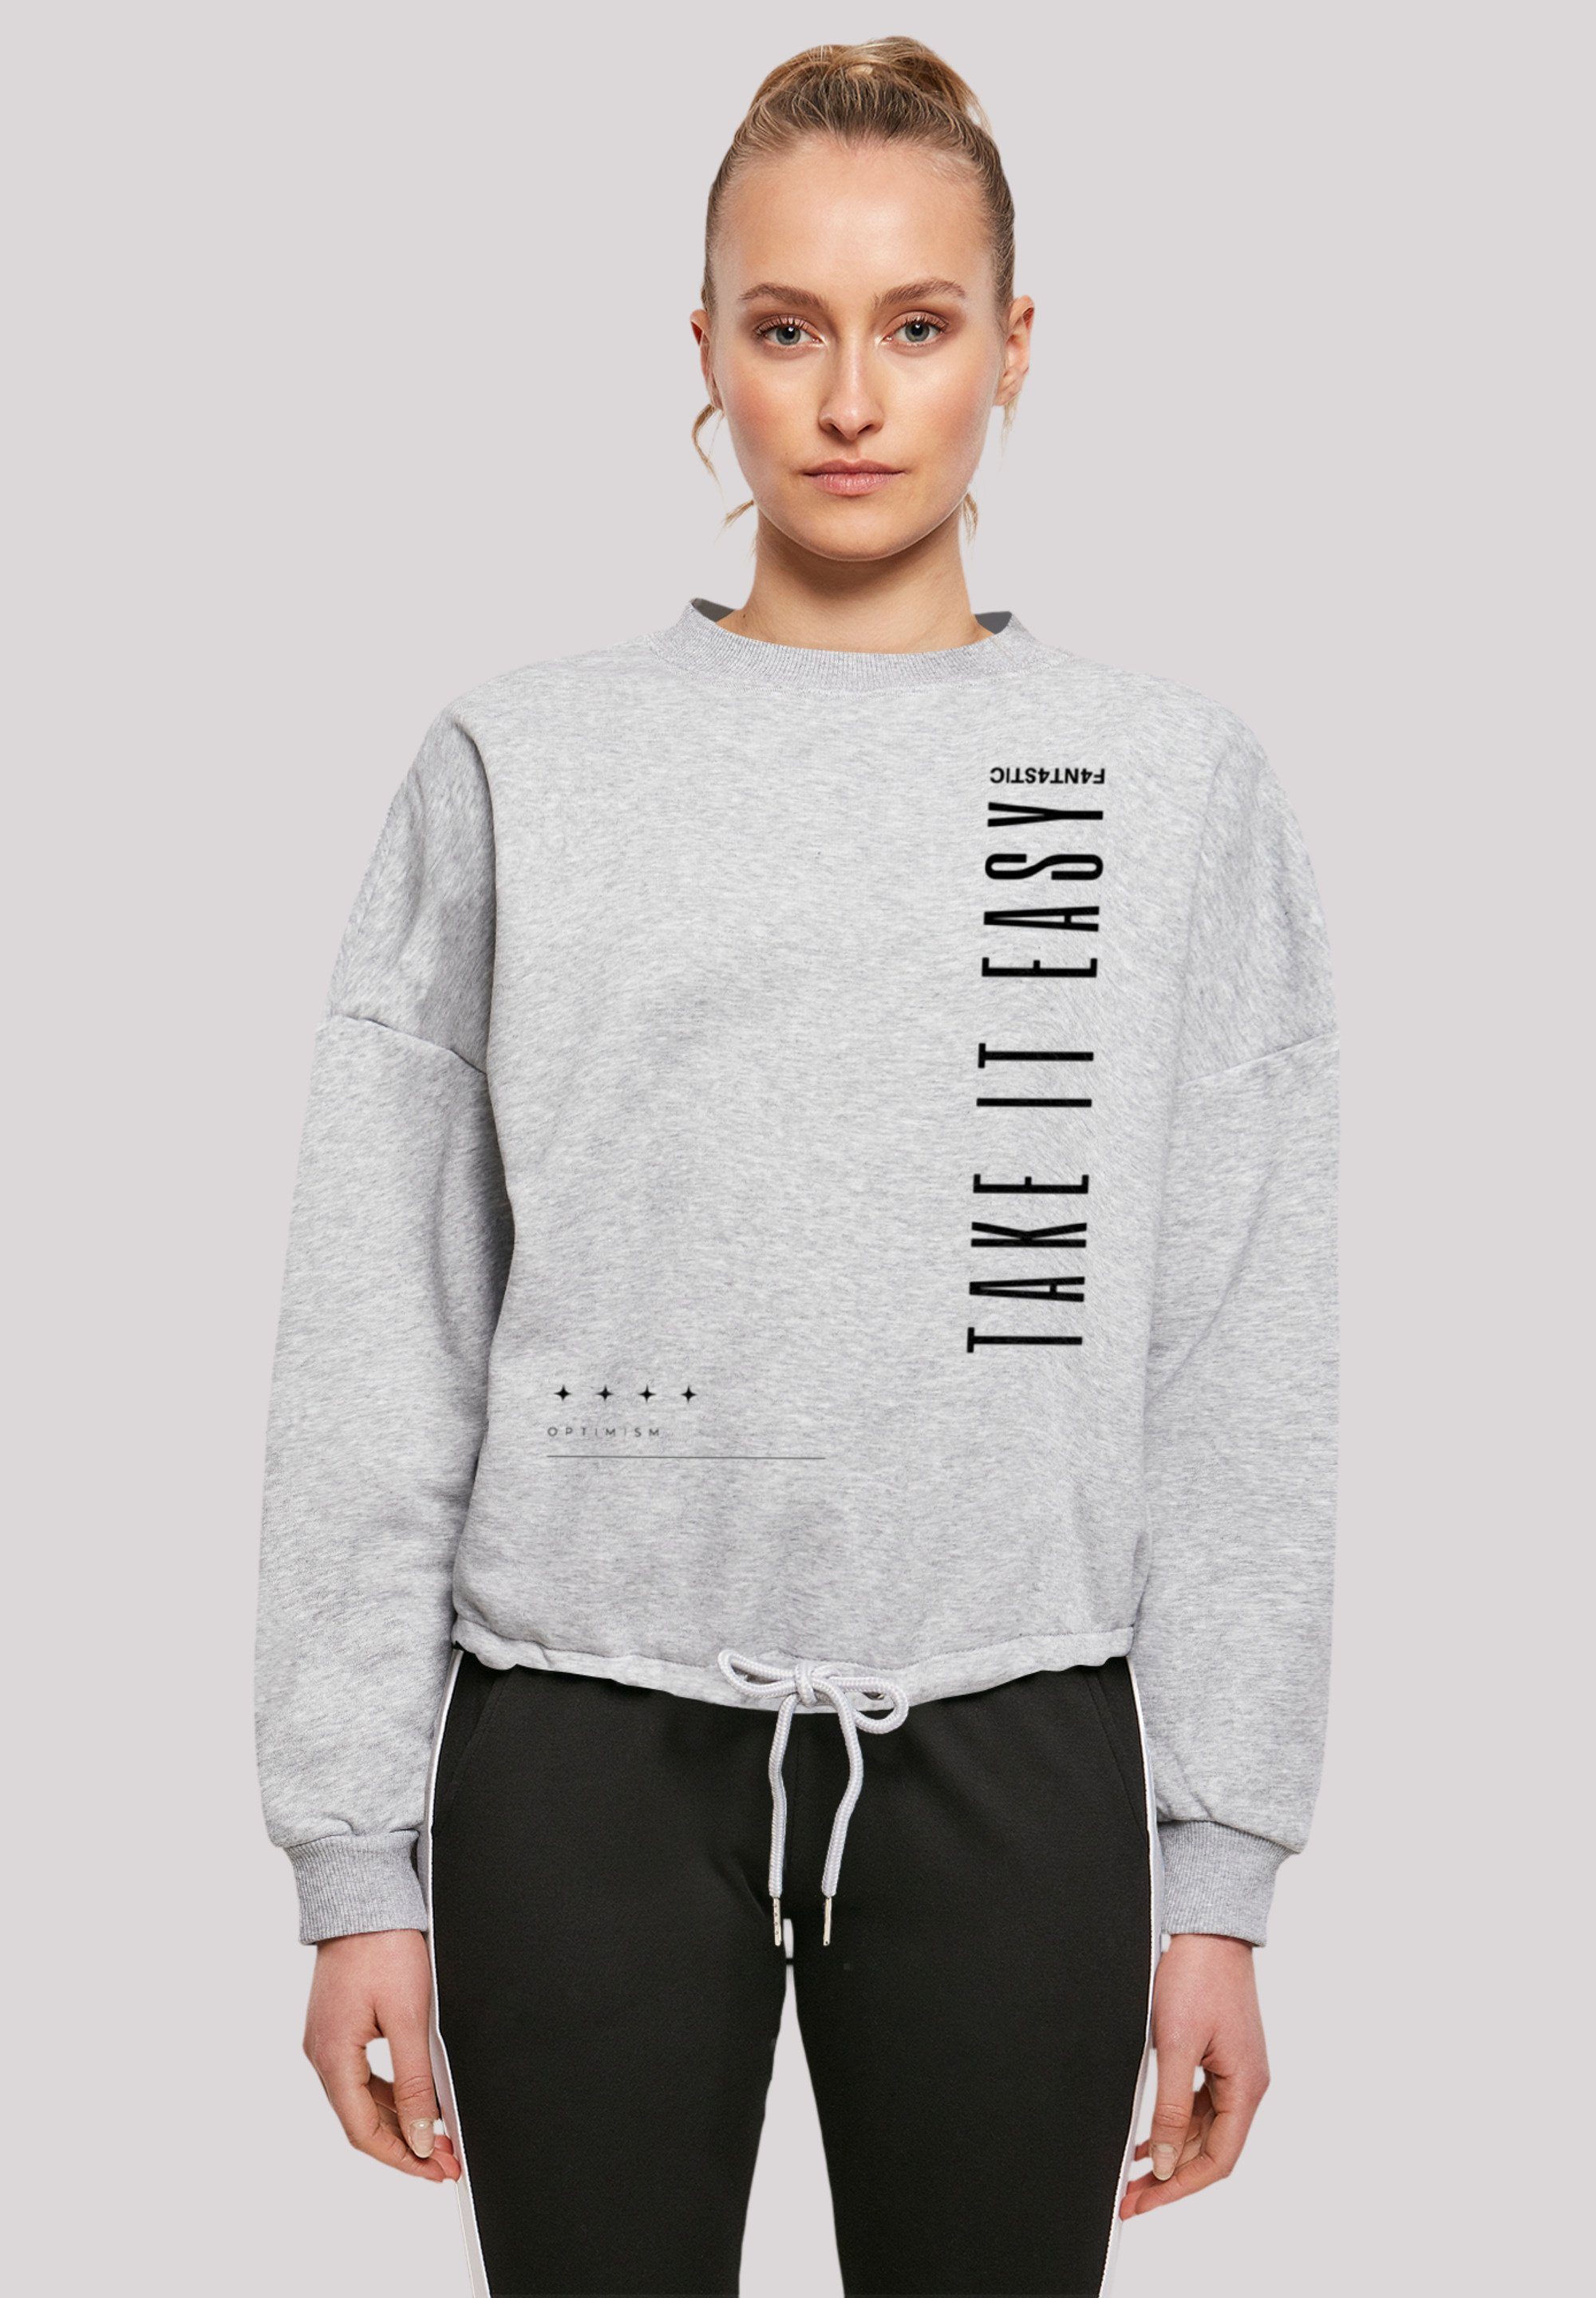 heather Print Sweatshirt Easy It grey Take F4NT4STIC